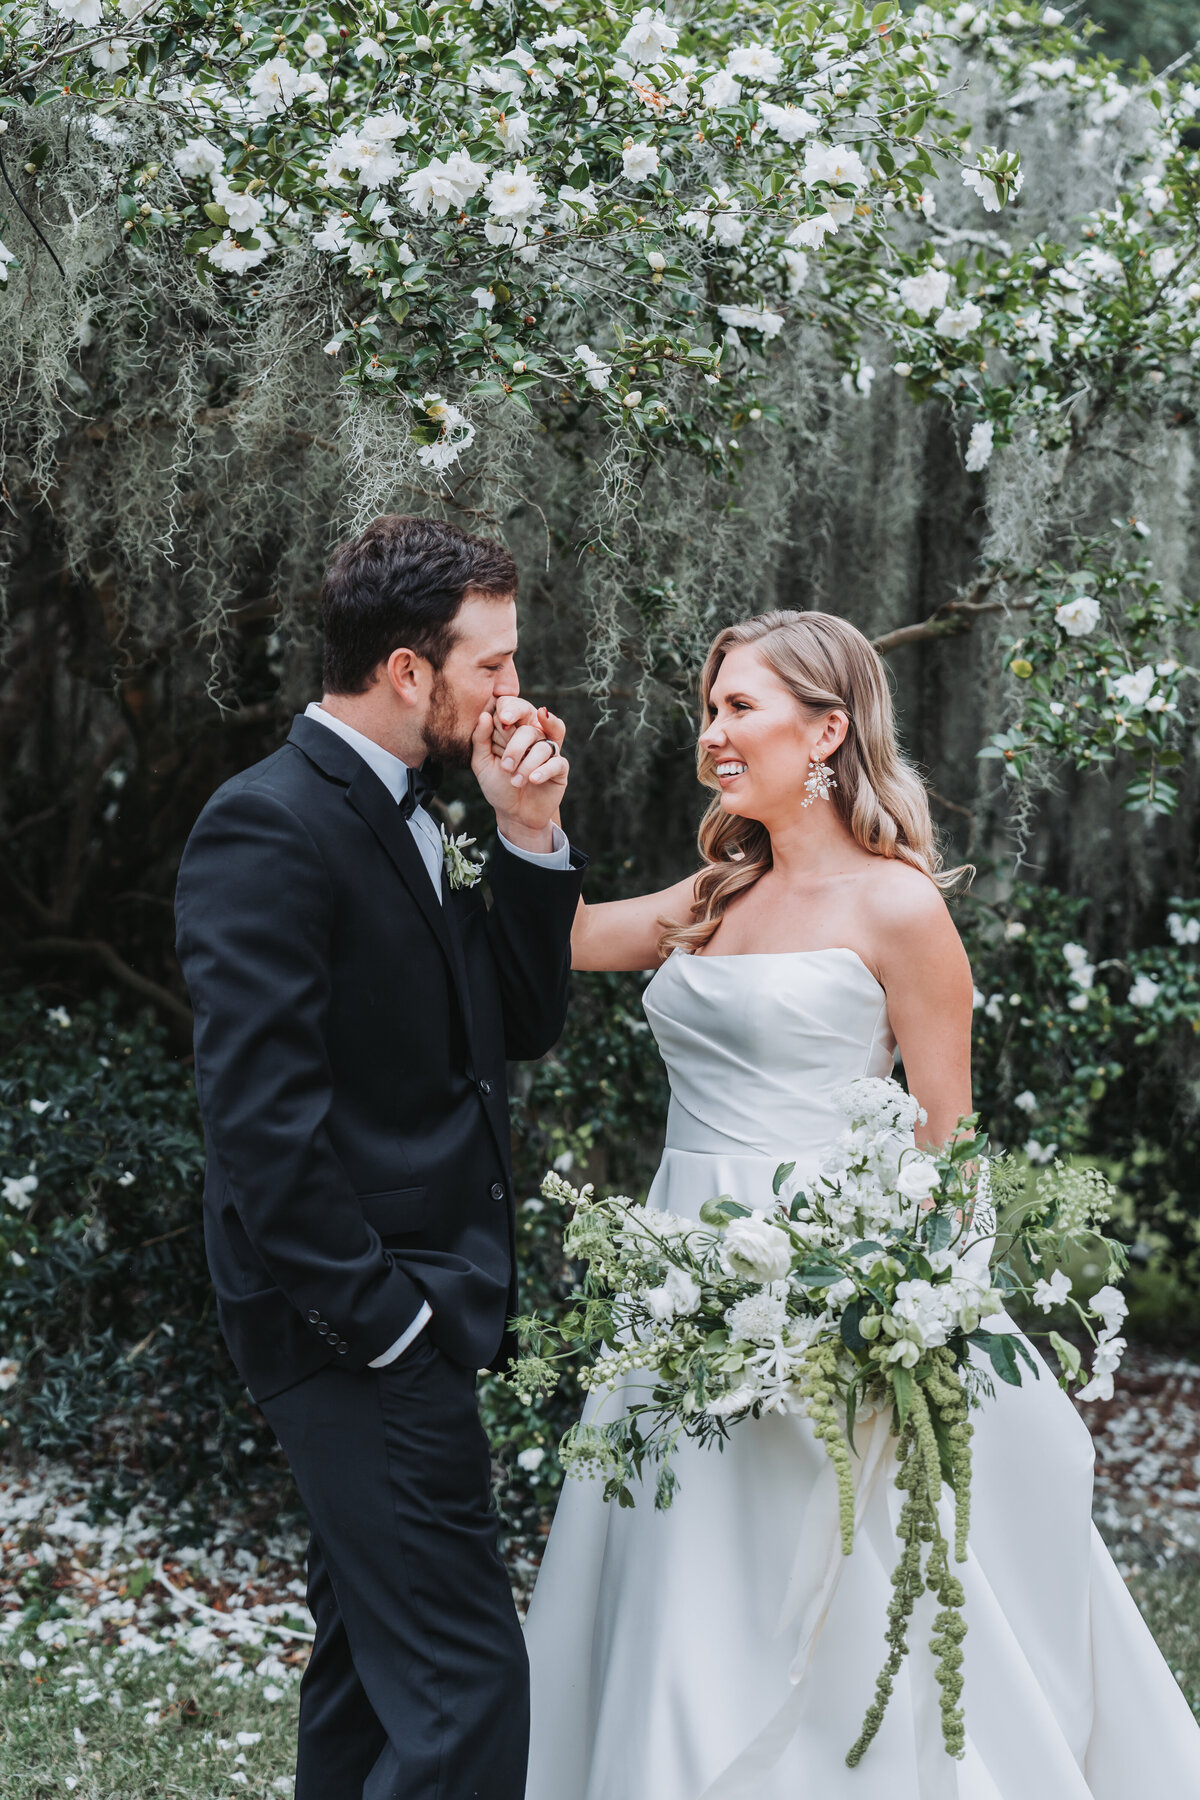 Groom kisses bride's hand under flowered tree